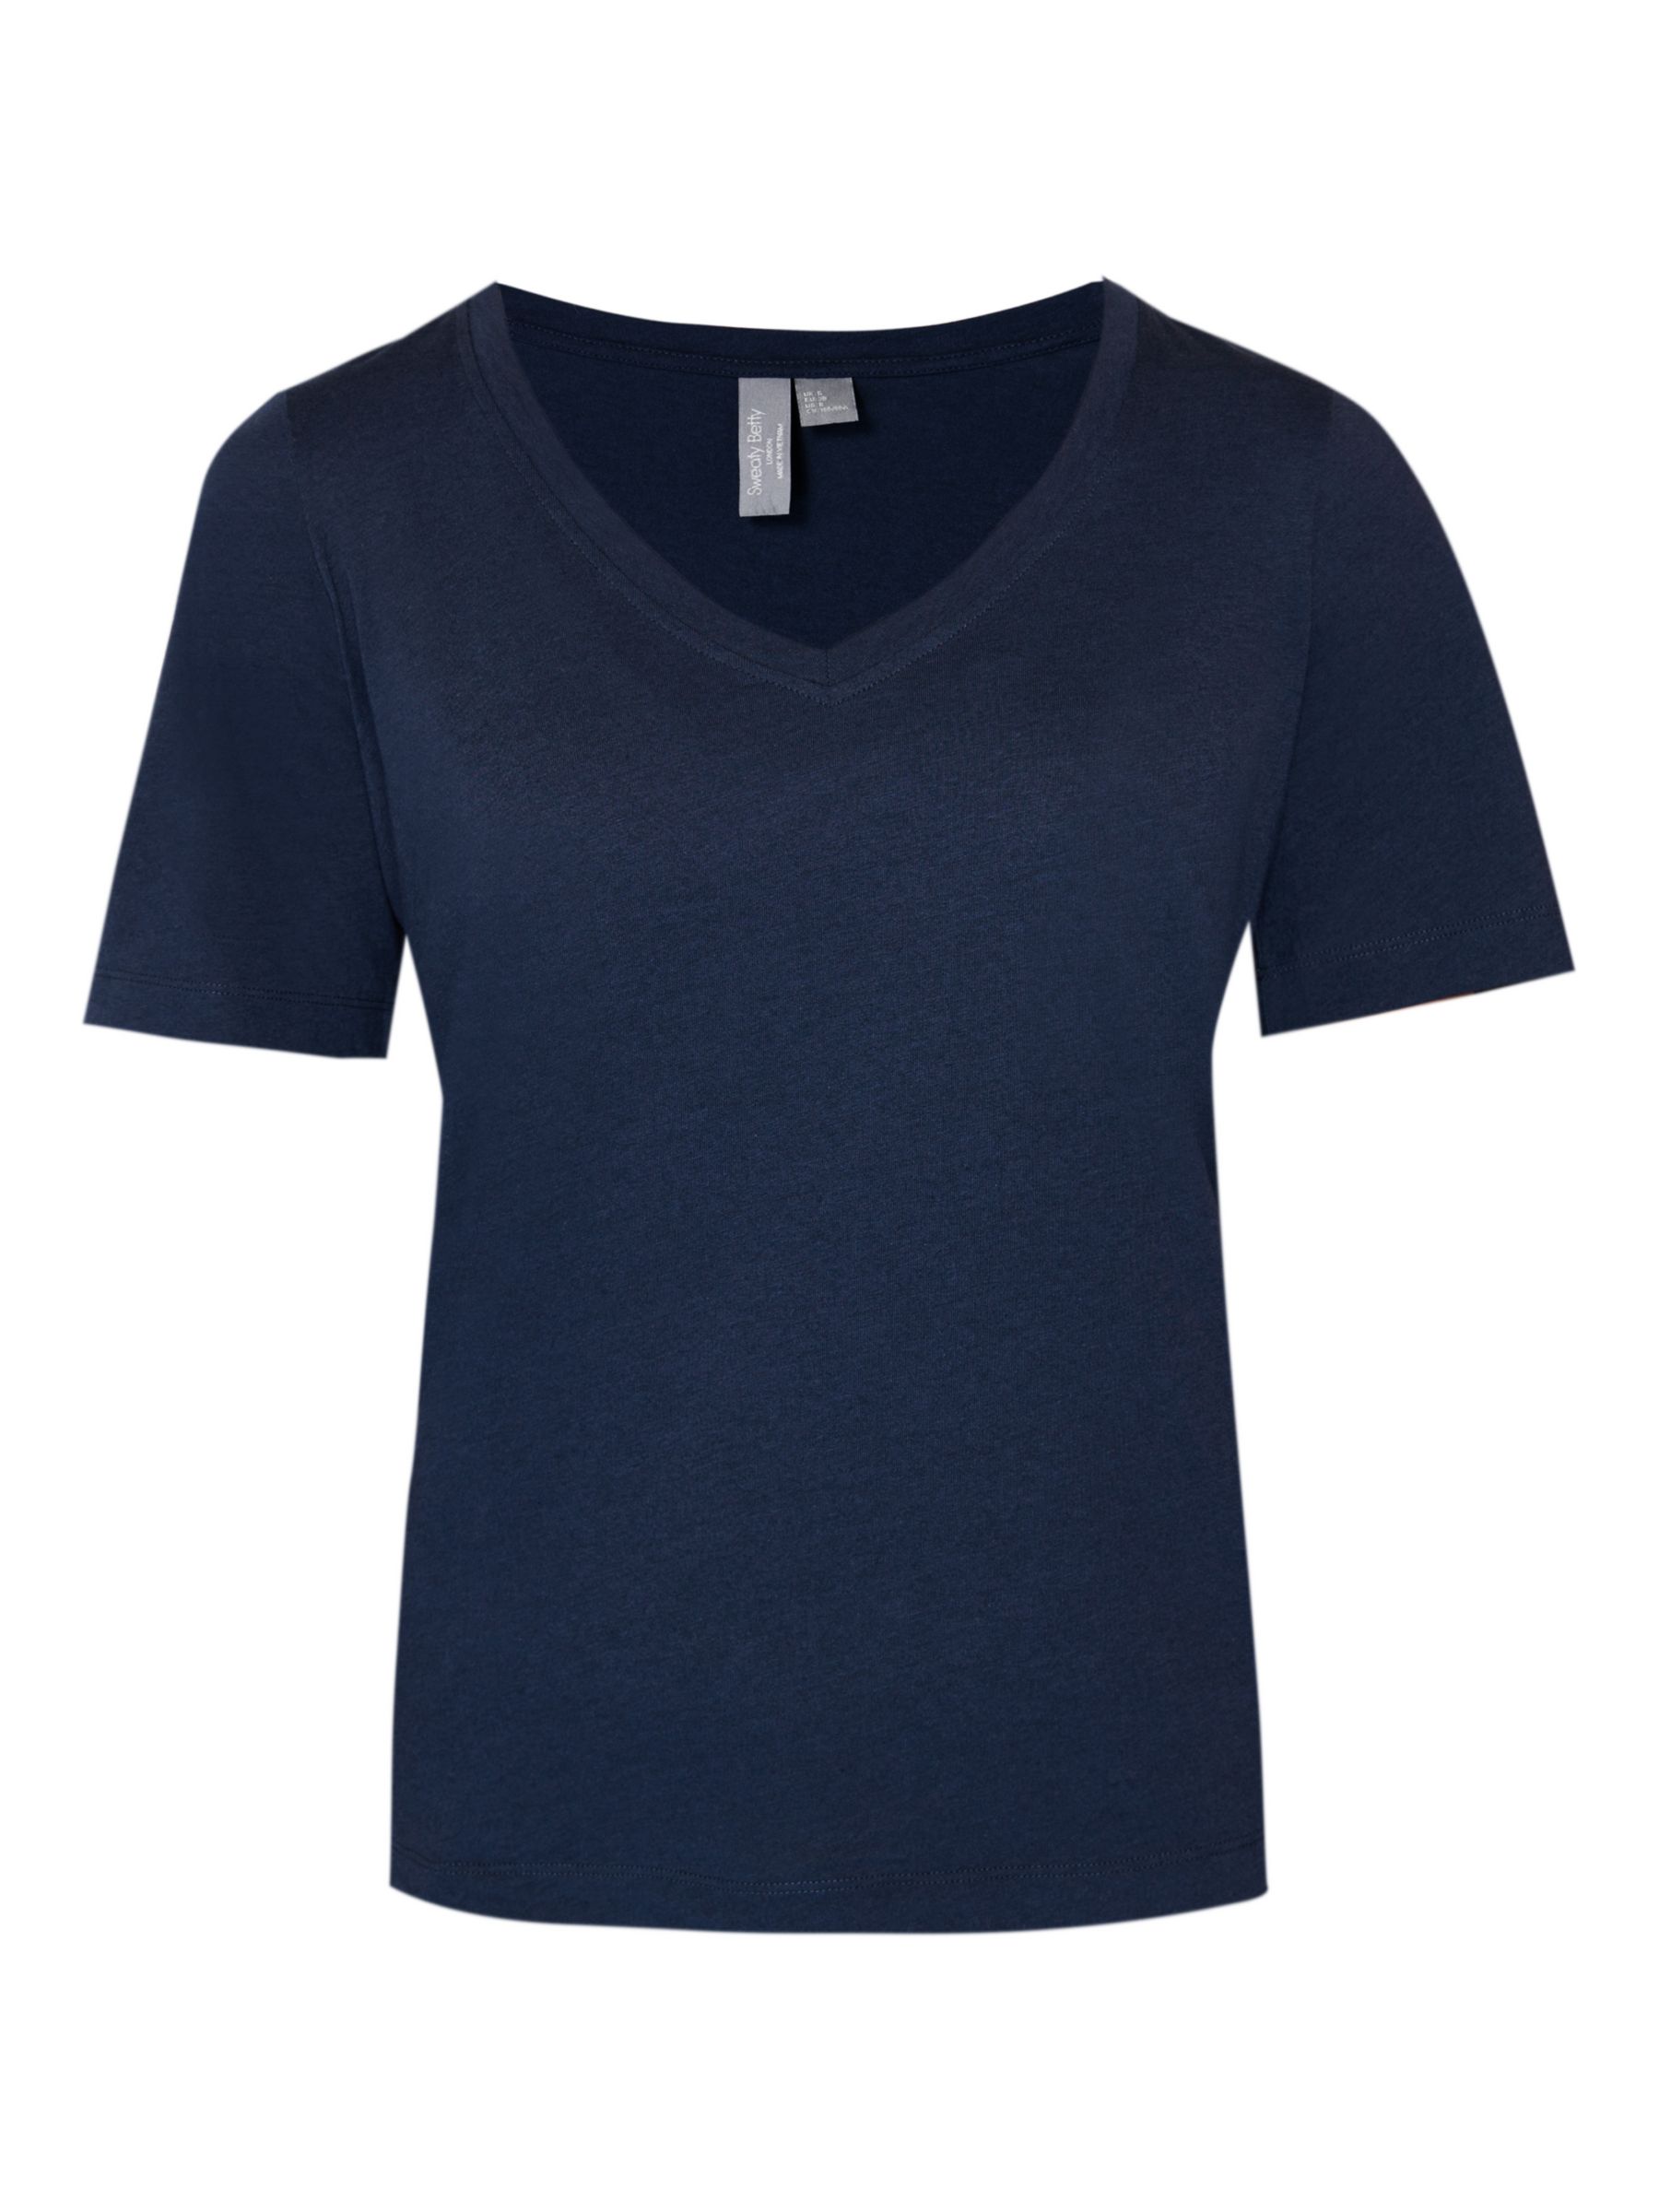 Sweaty Betty Essential Organic Cotton Blend V-Neck T-Shirt, Navy Blue, XXS